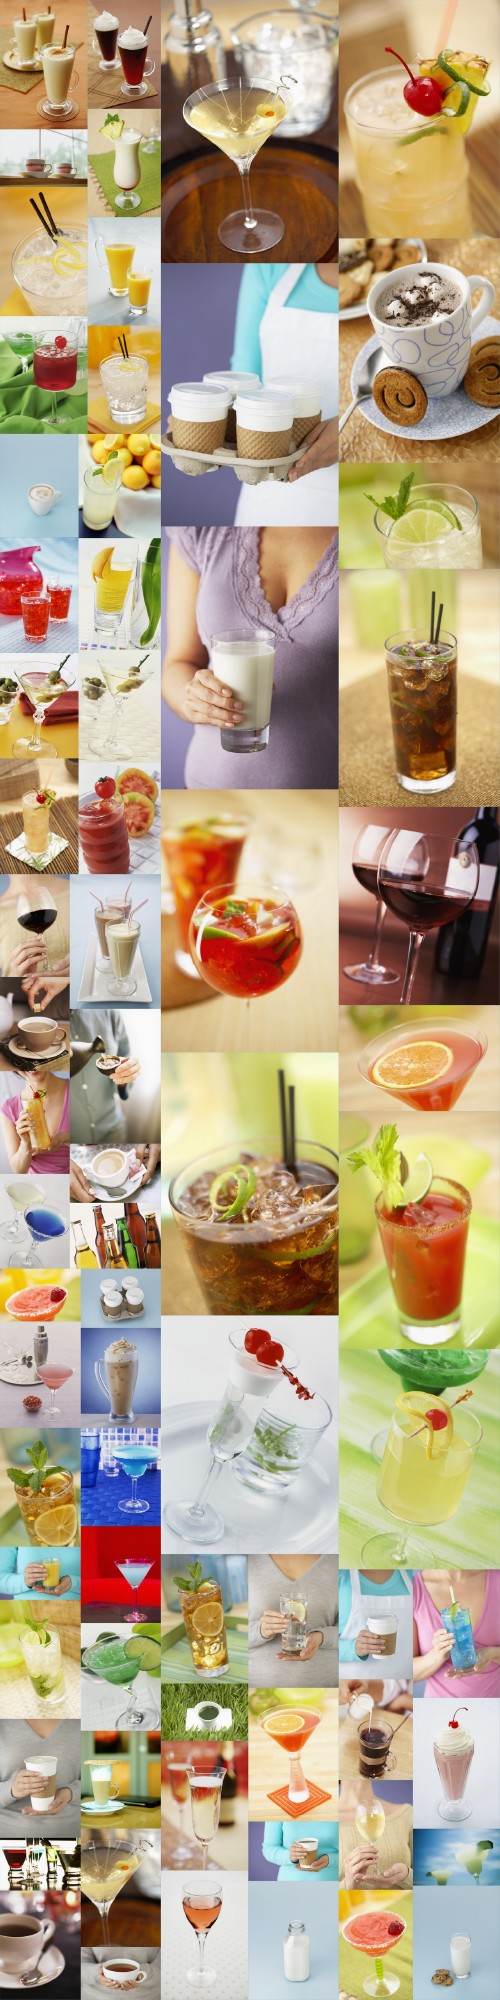 Stock Photos - Drink Up!